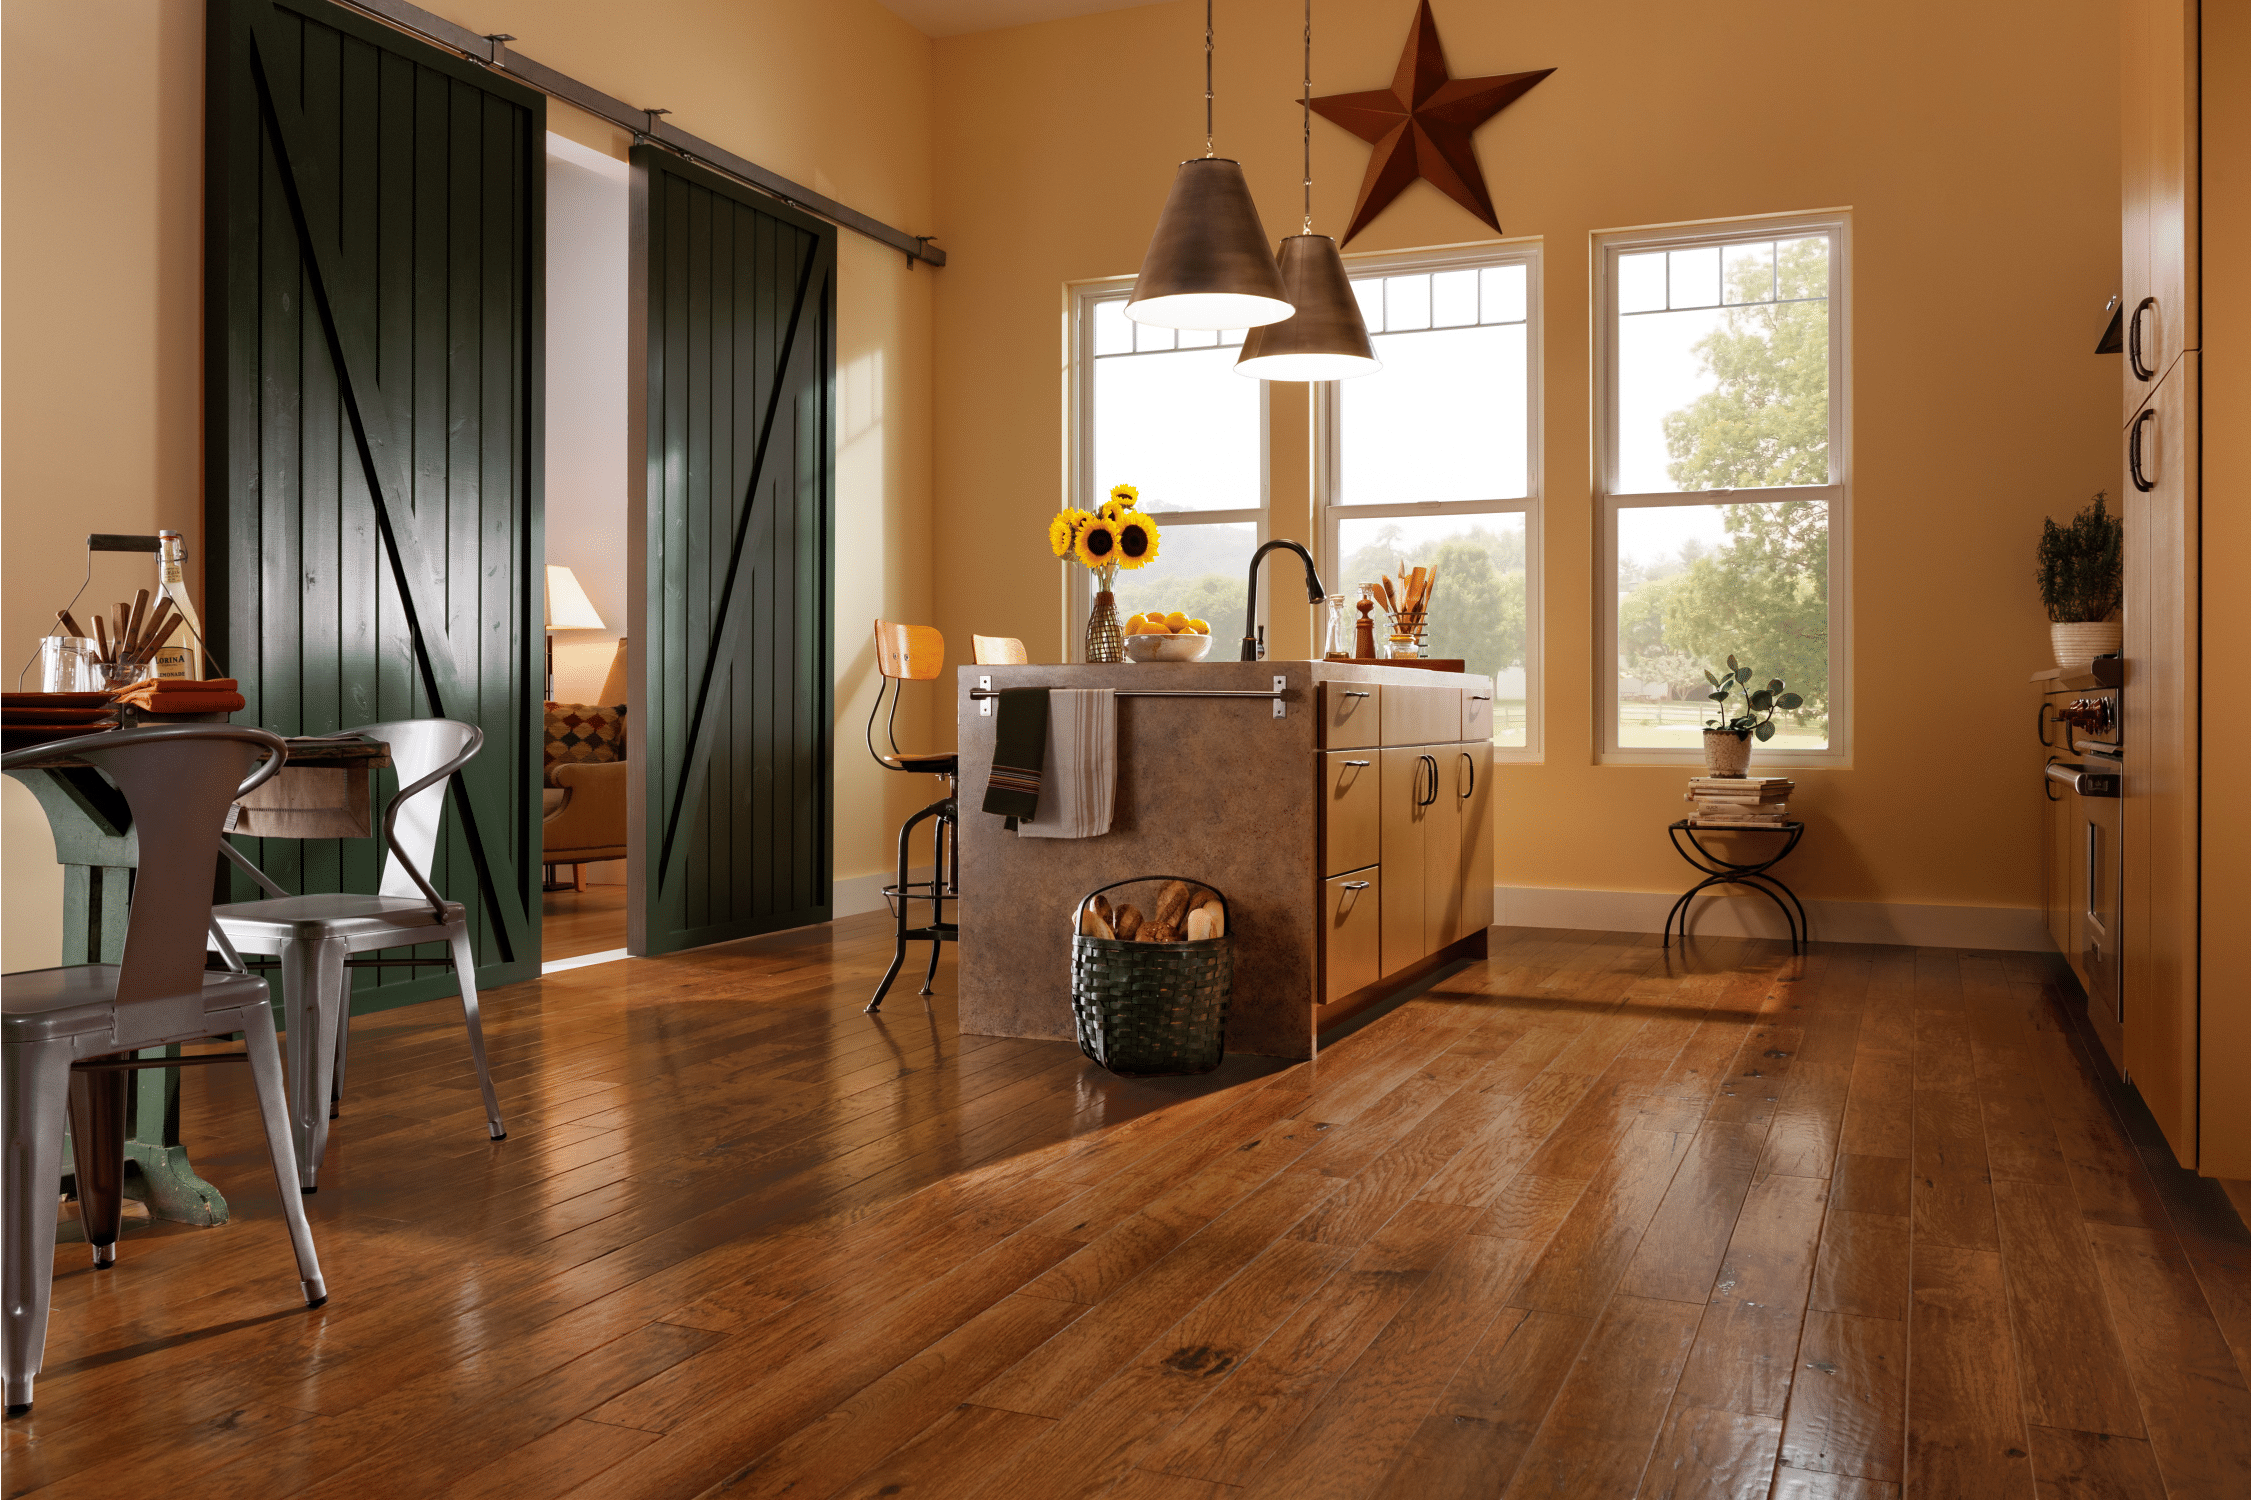 A kitchen with beautiful hardwood floors.